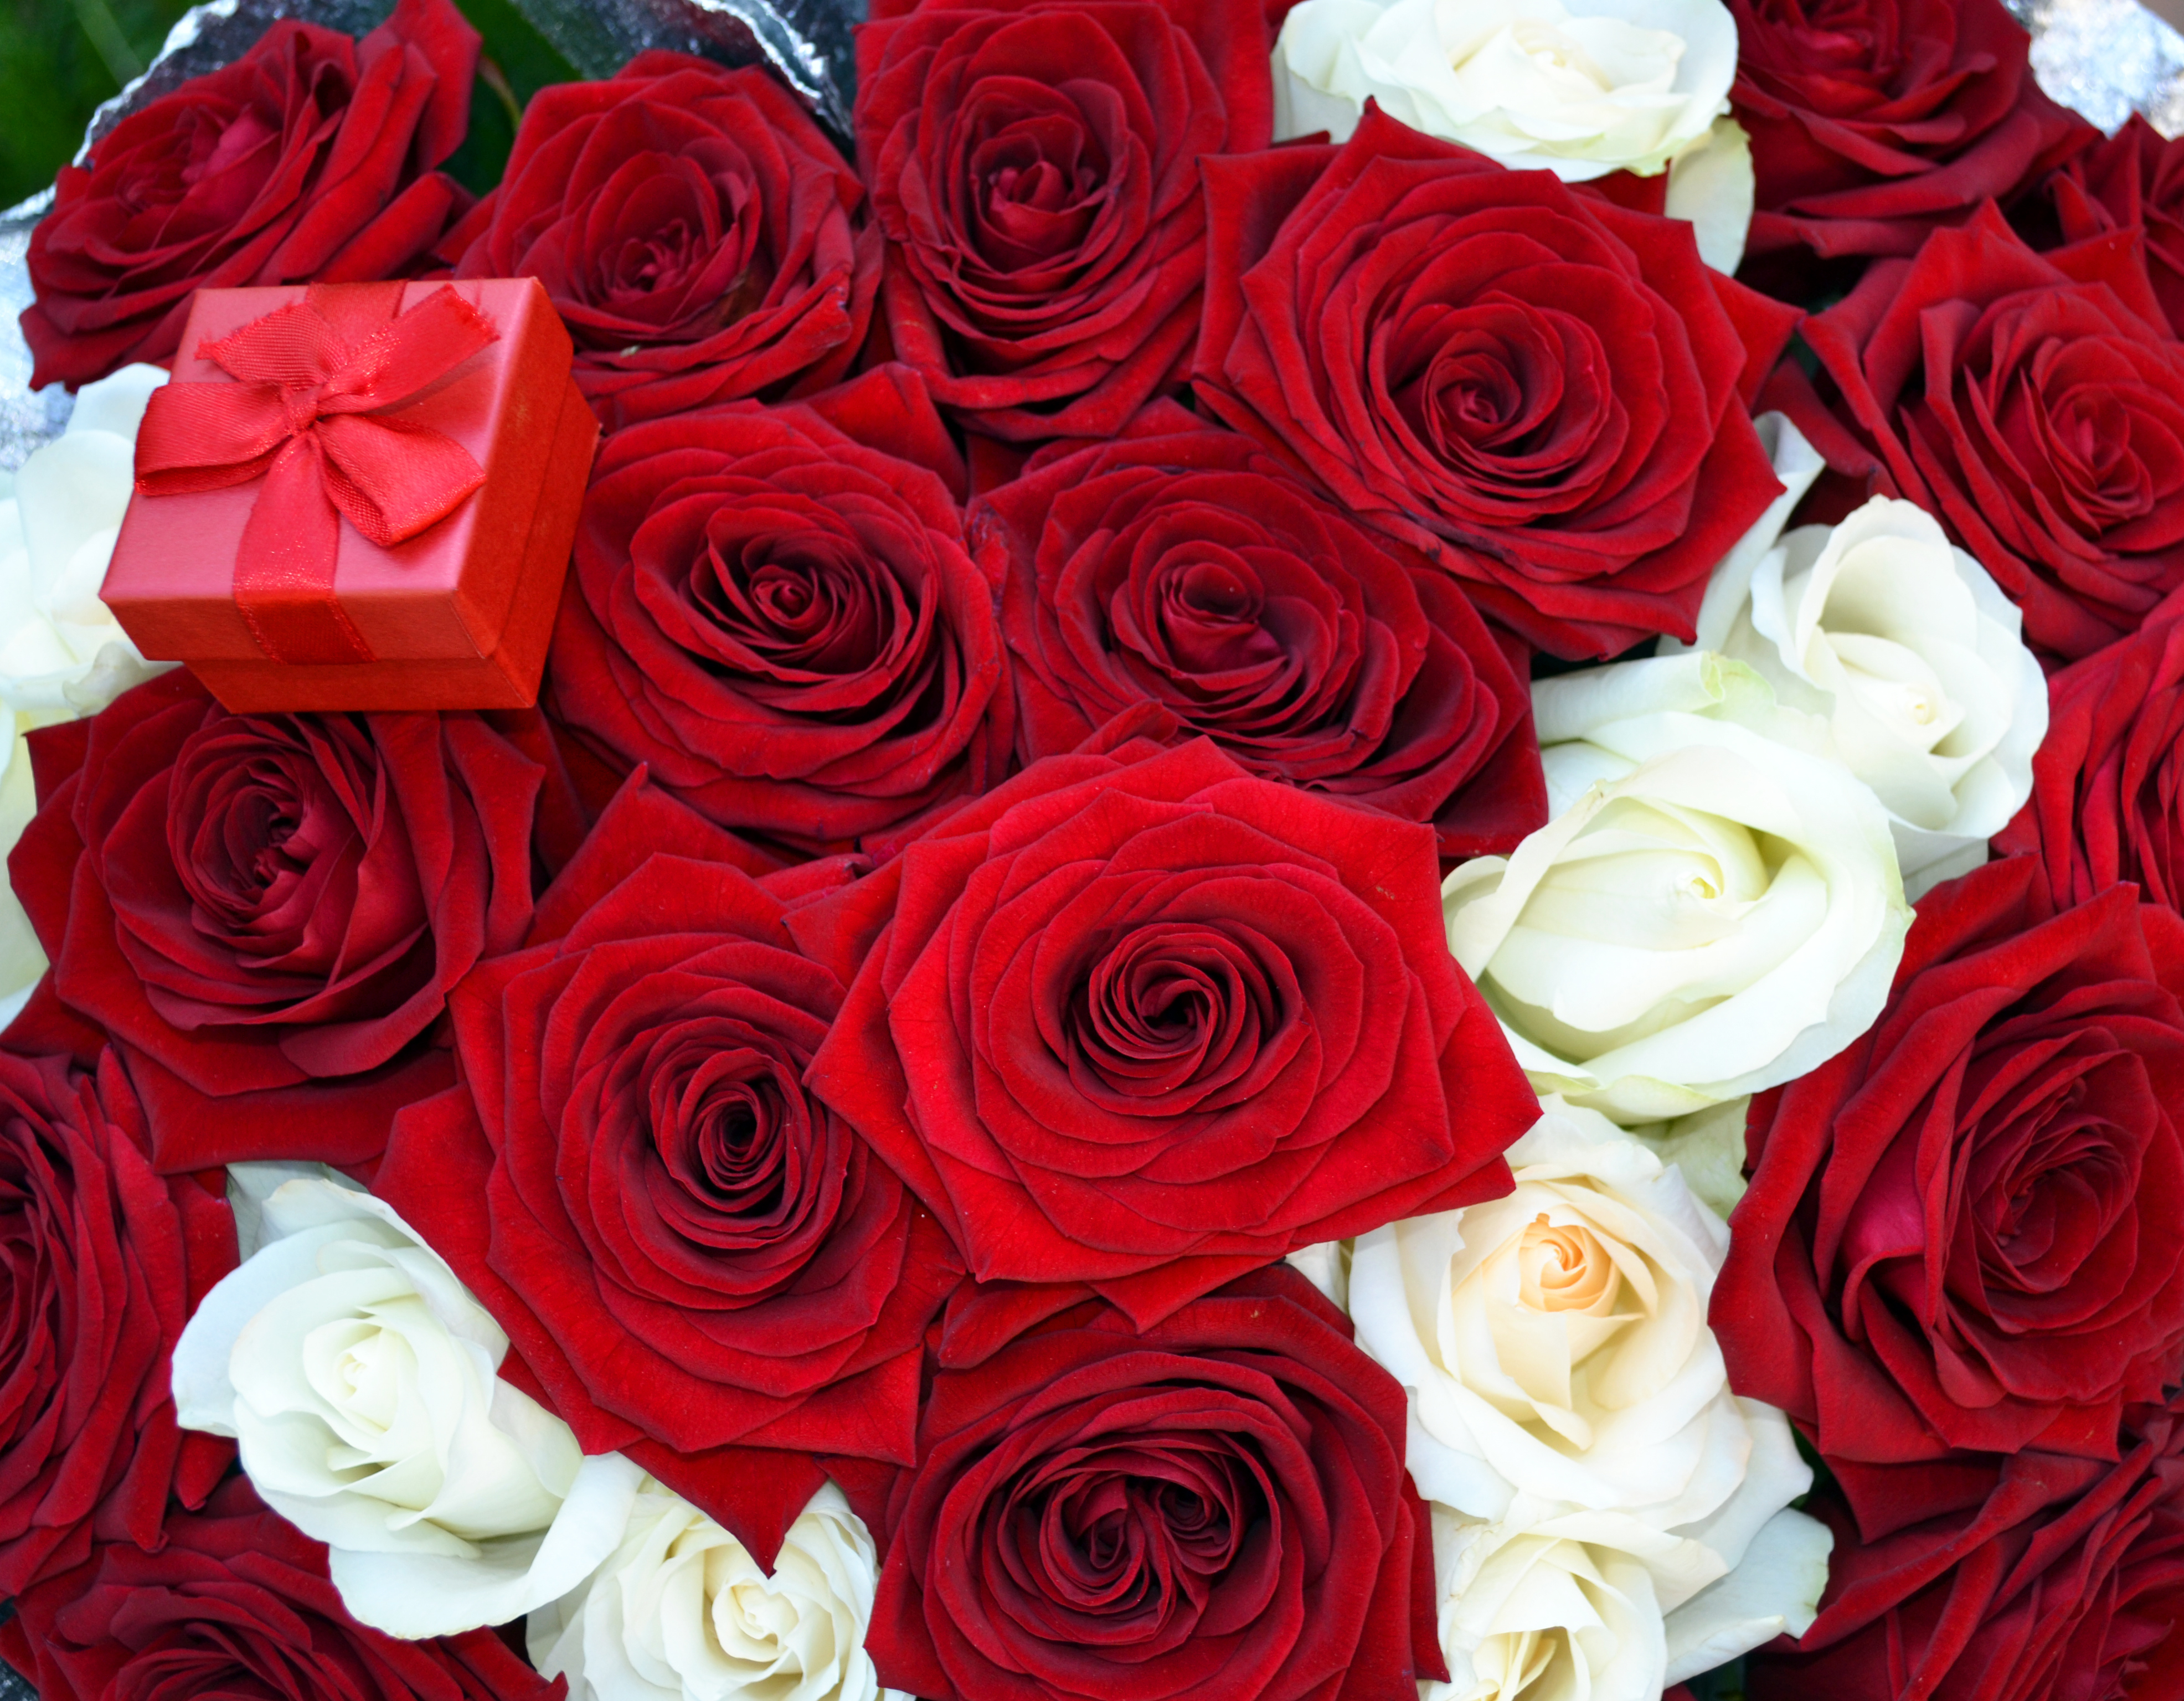 Роз оо. Красивый букет роз. Шикарный букет роз. Красивый букет красных роз.